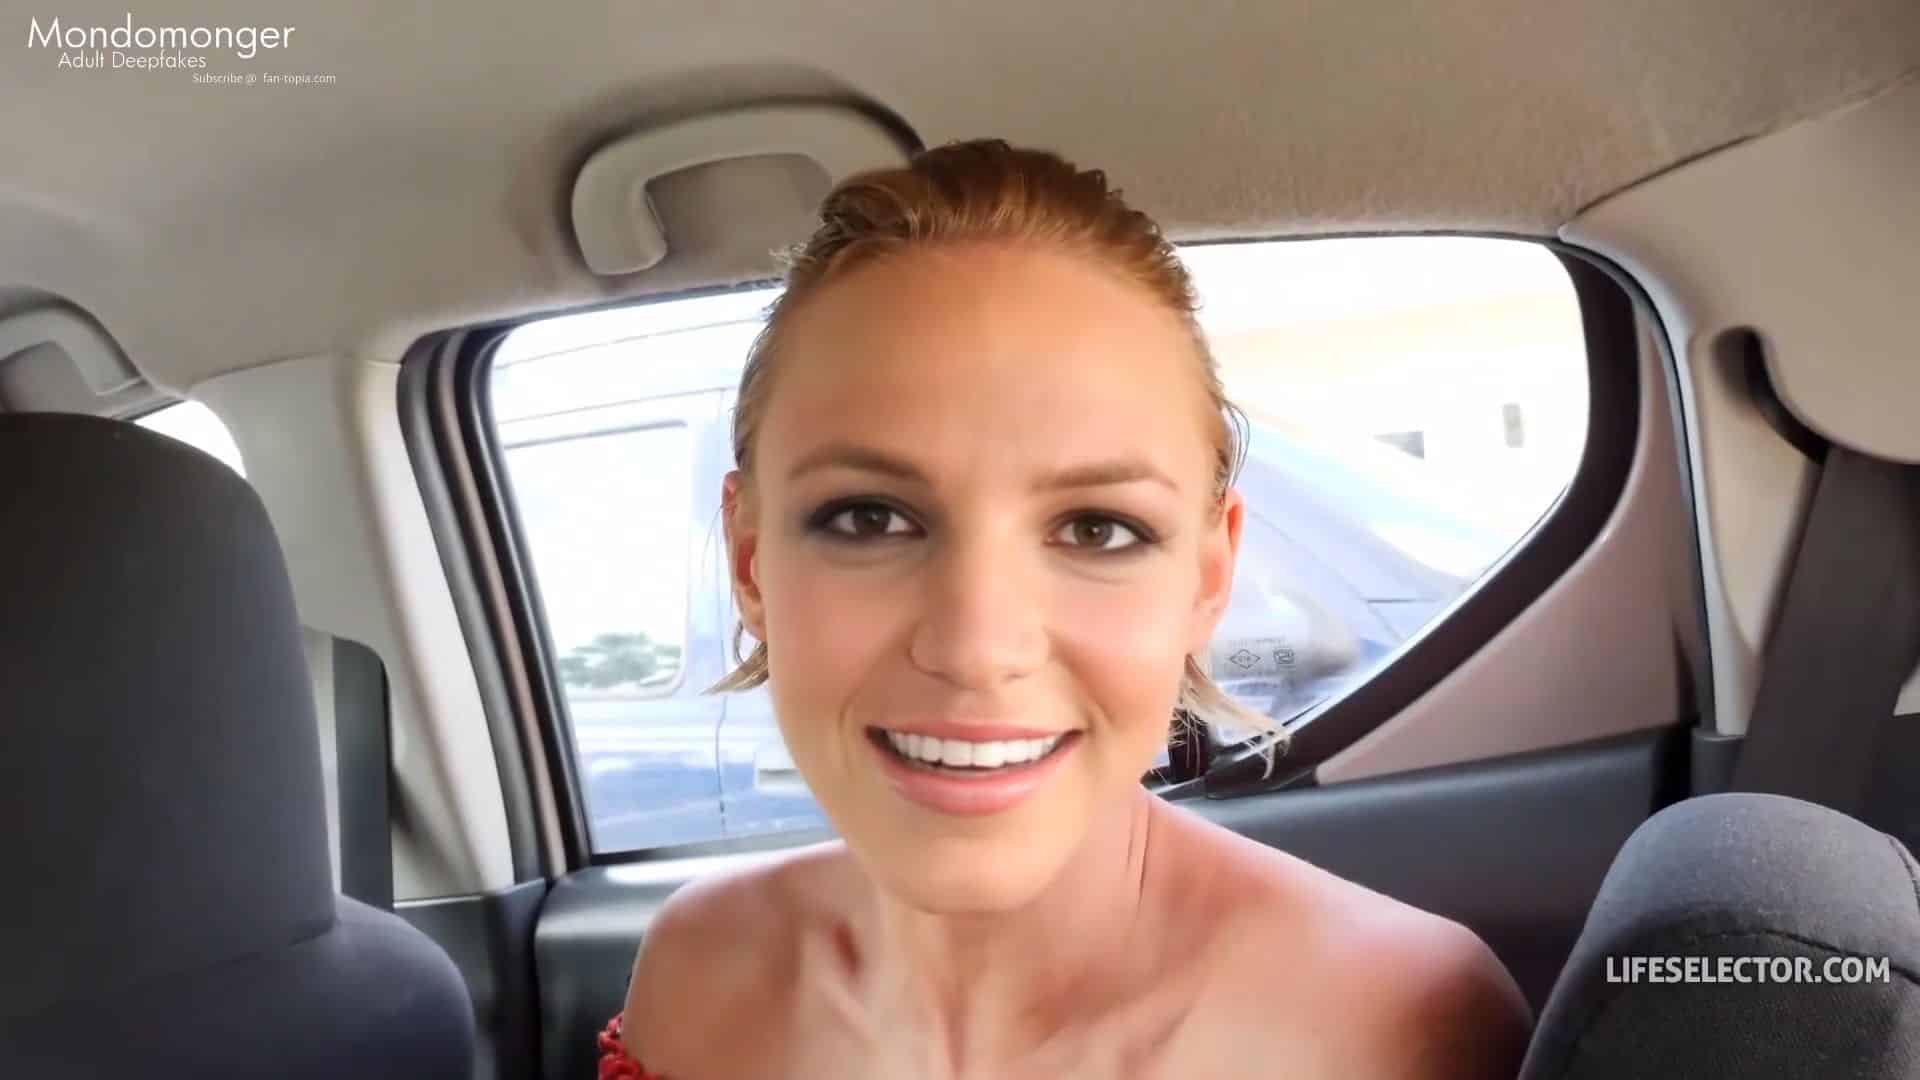 Britney Spears Deepfake [Mondomonger] Urlaub Sex Tape